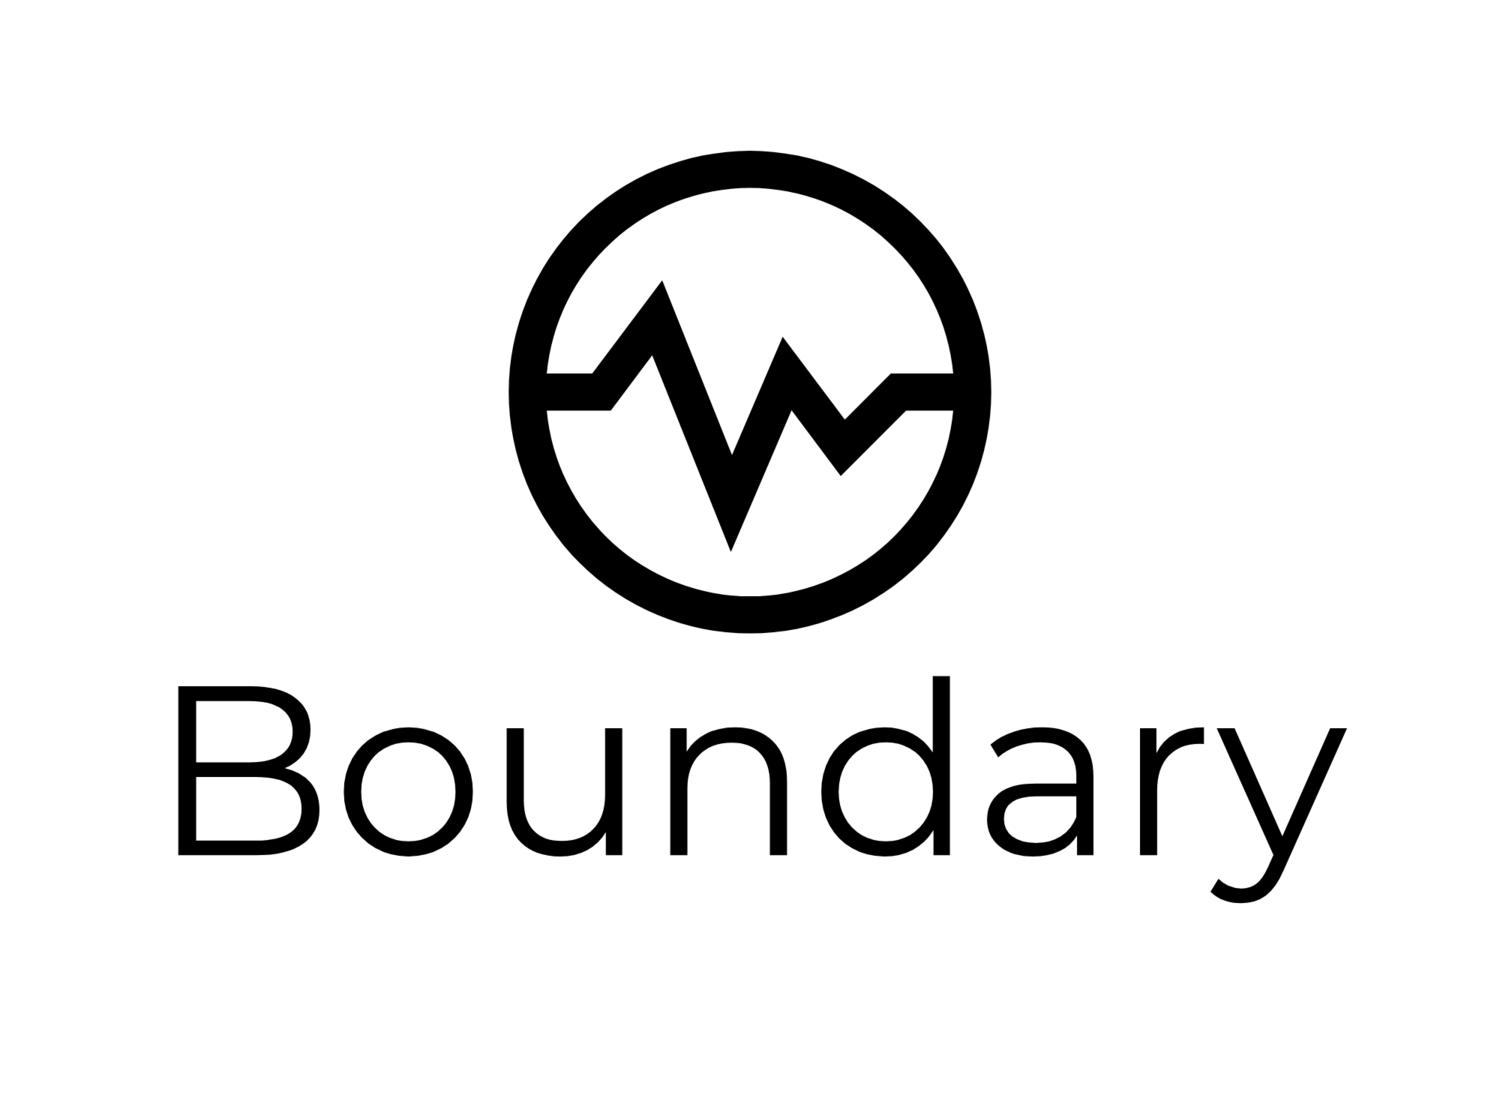 Boundary Logo - Boundary